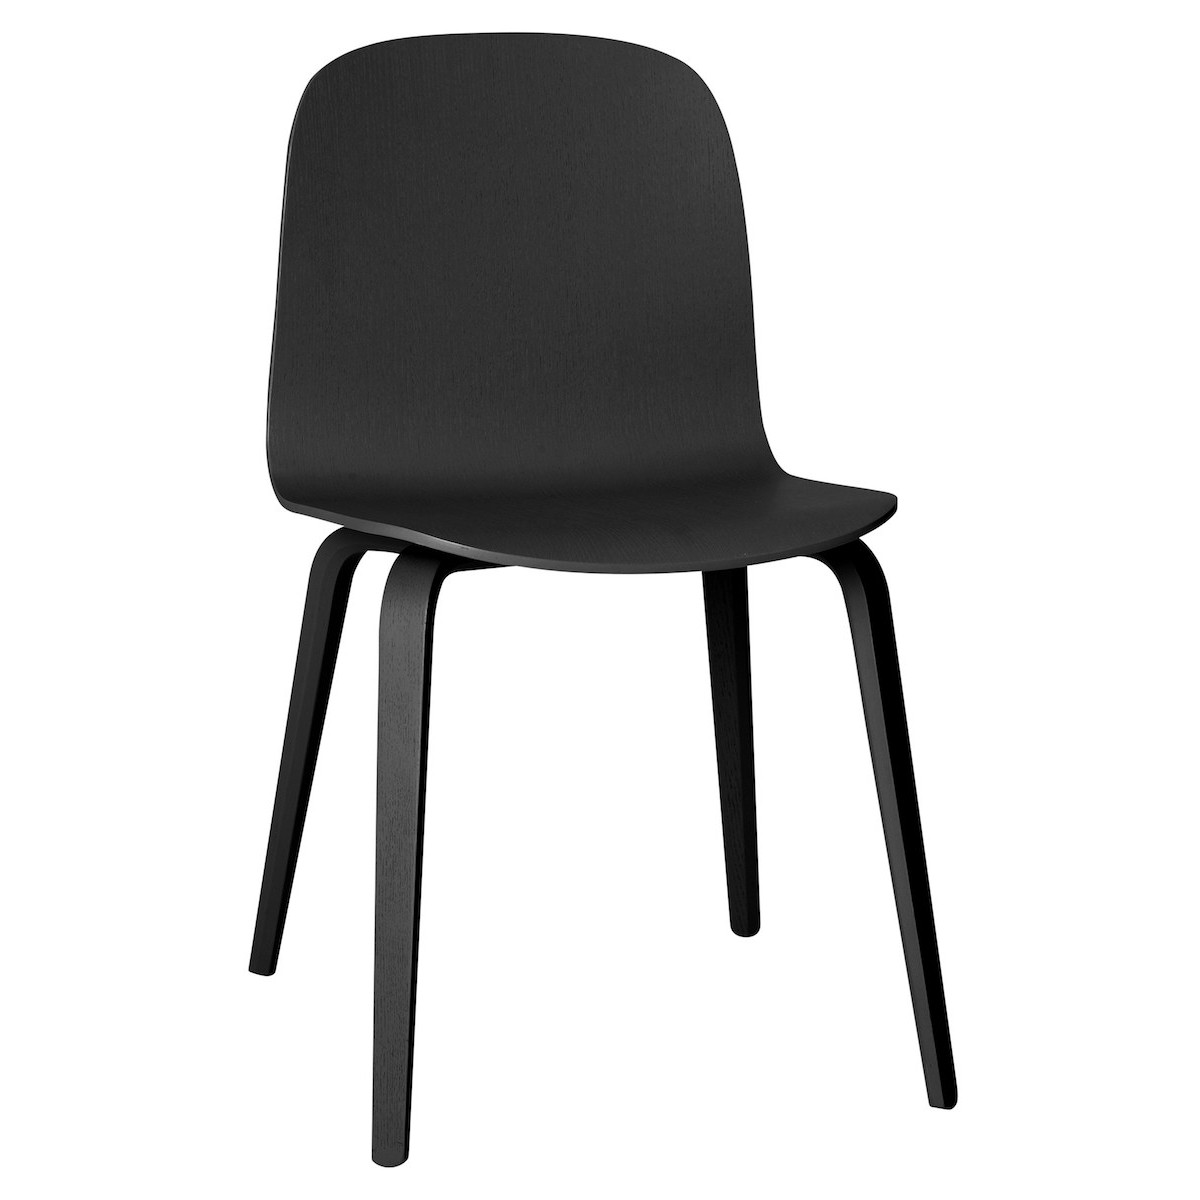 black - wooden base Visu chair